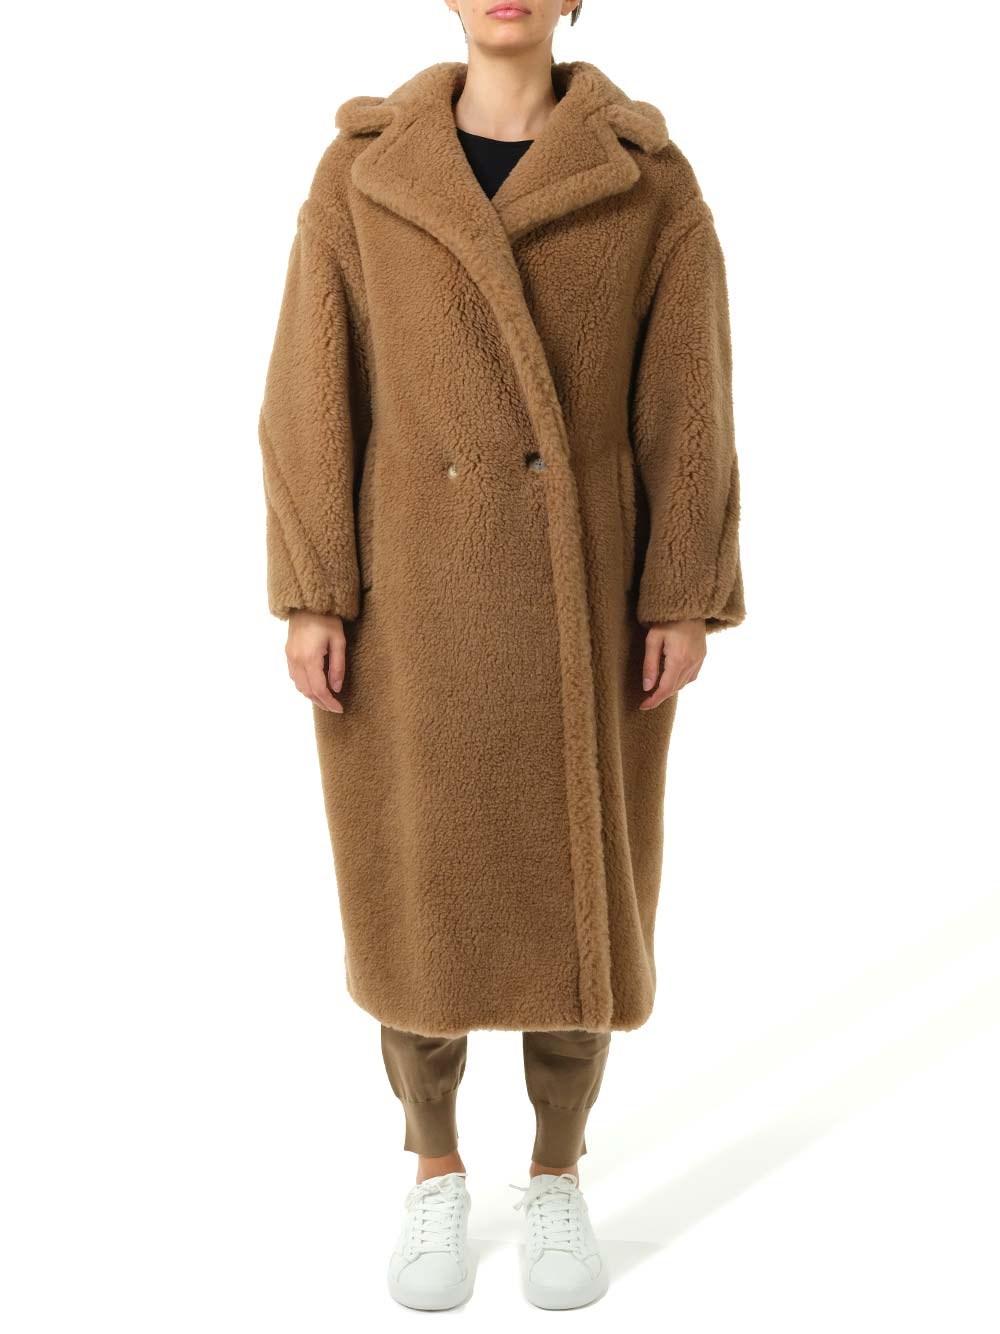 Max Mara "edoardo" Teddy Coat in Brown | Lyst